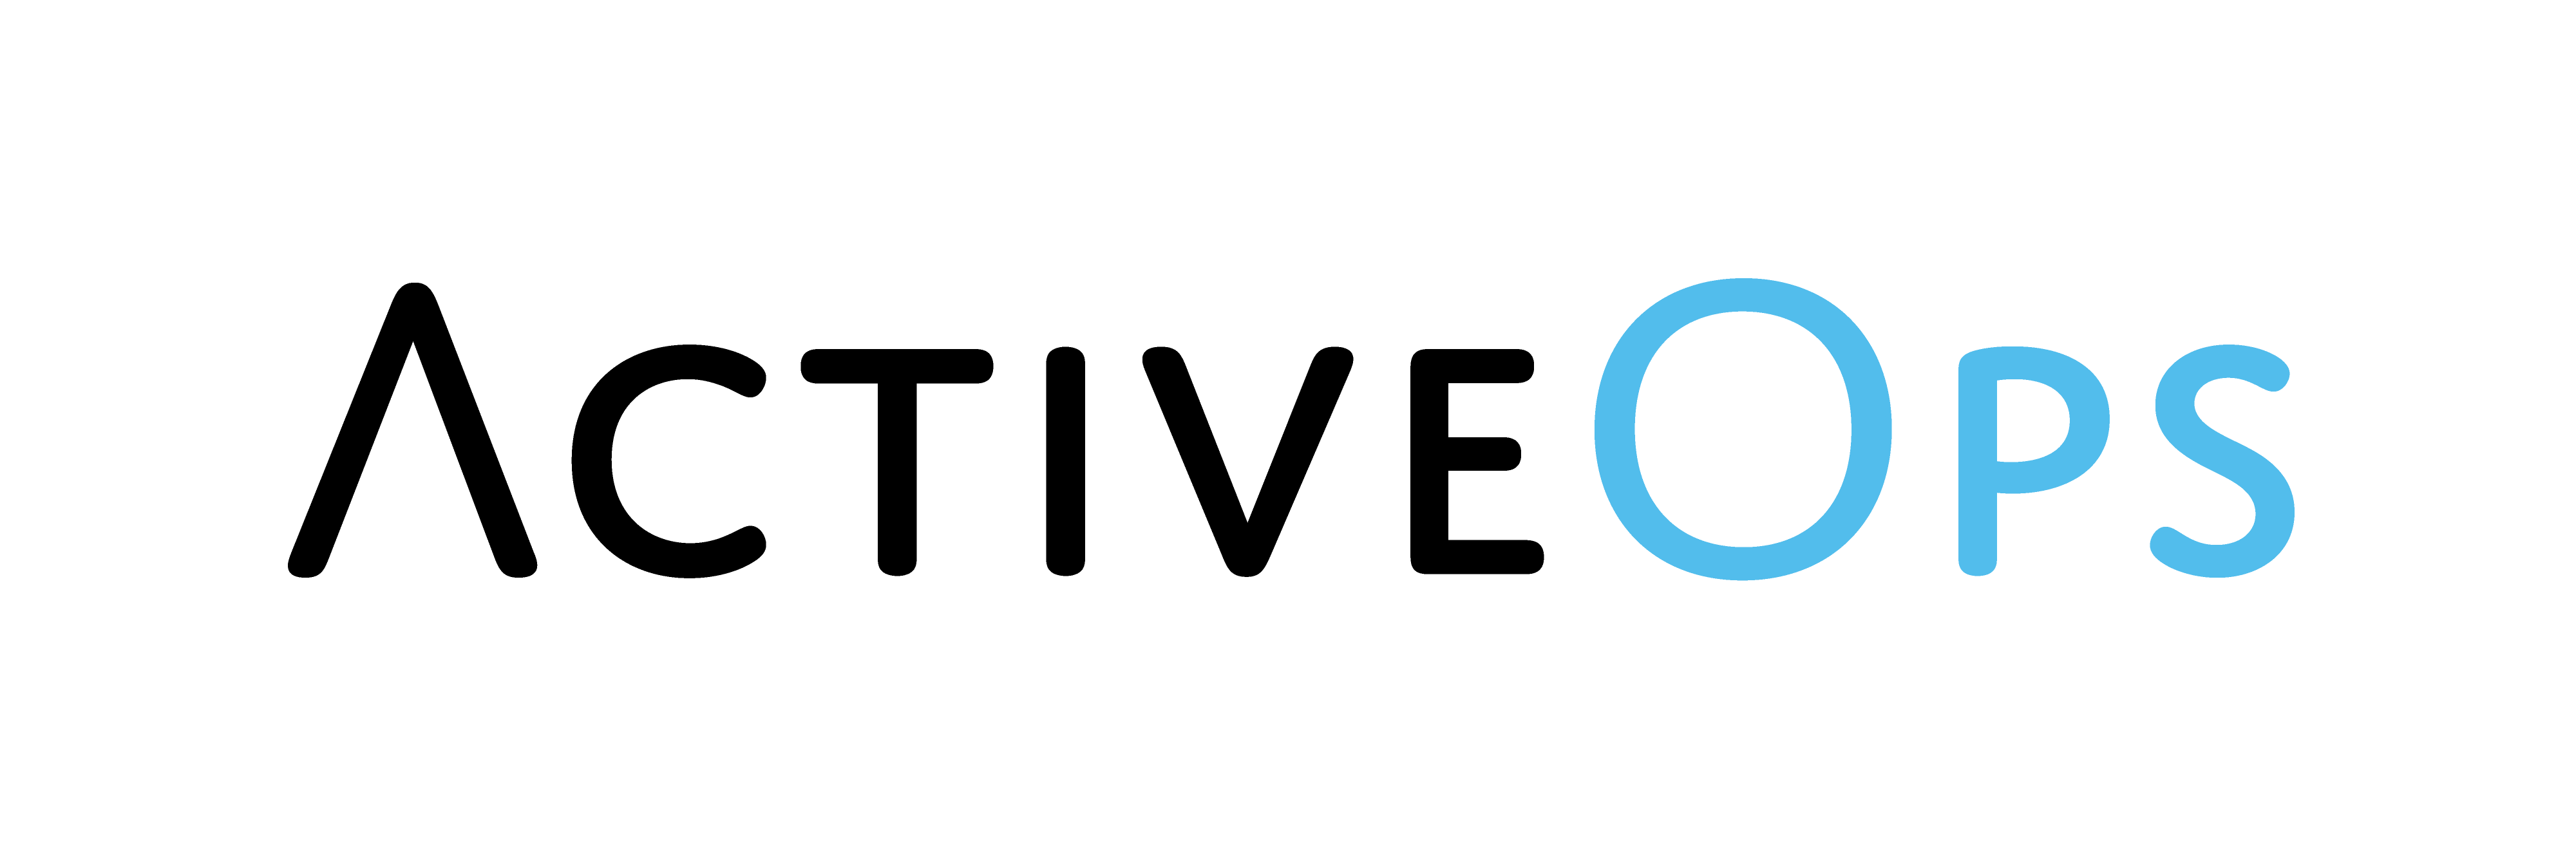 ActiveOps-Logo_Colour_Large (002)